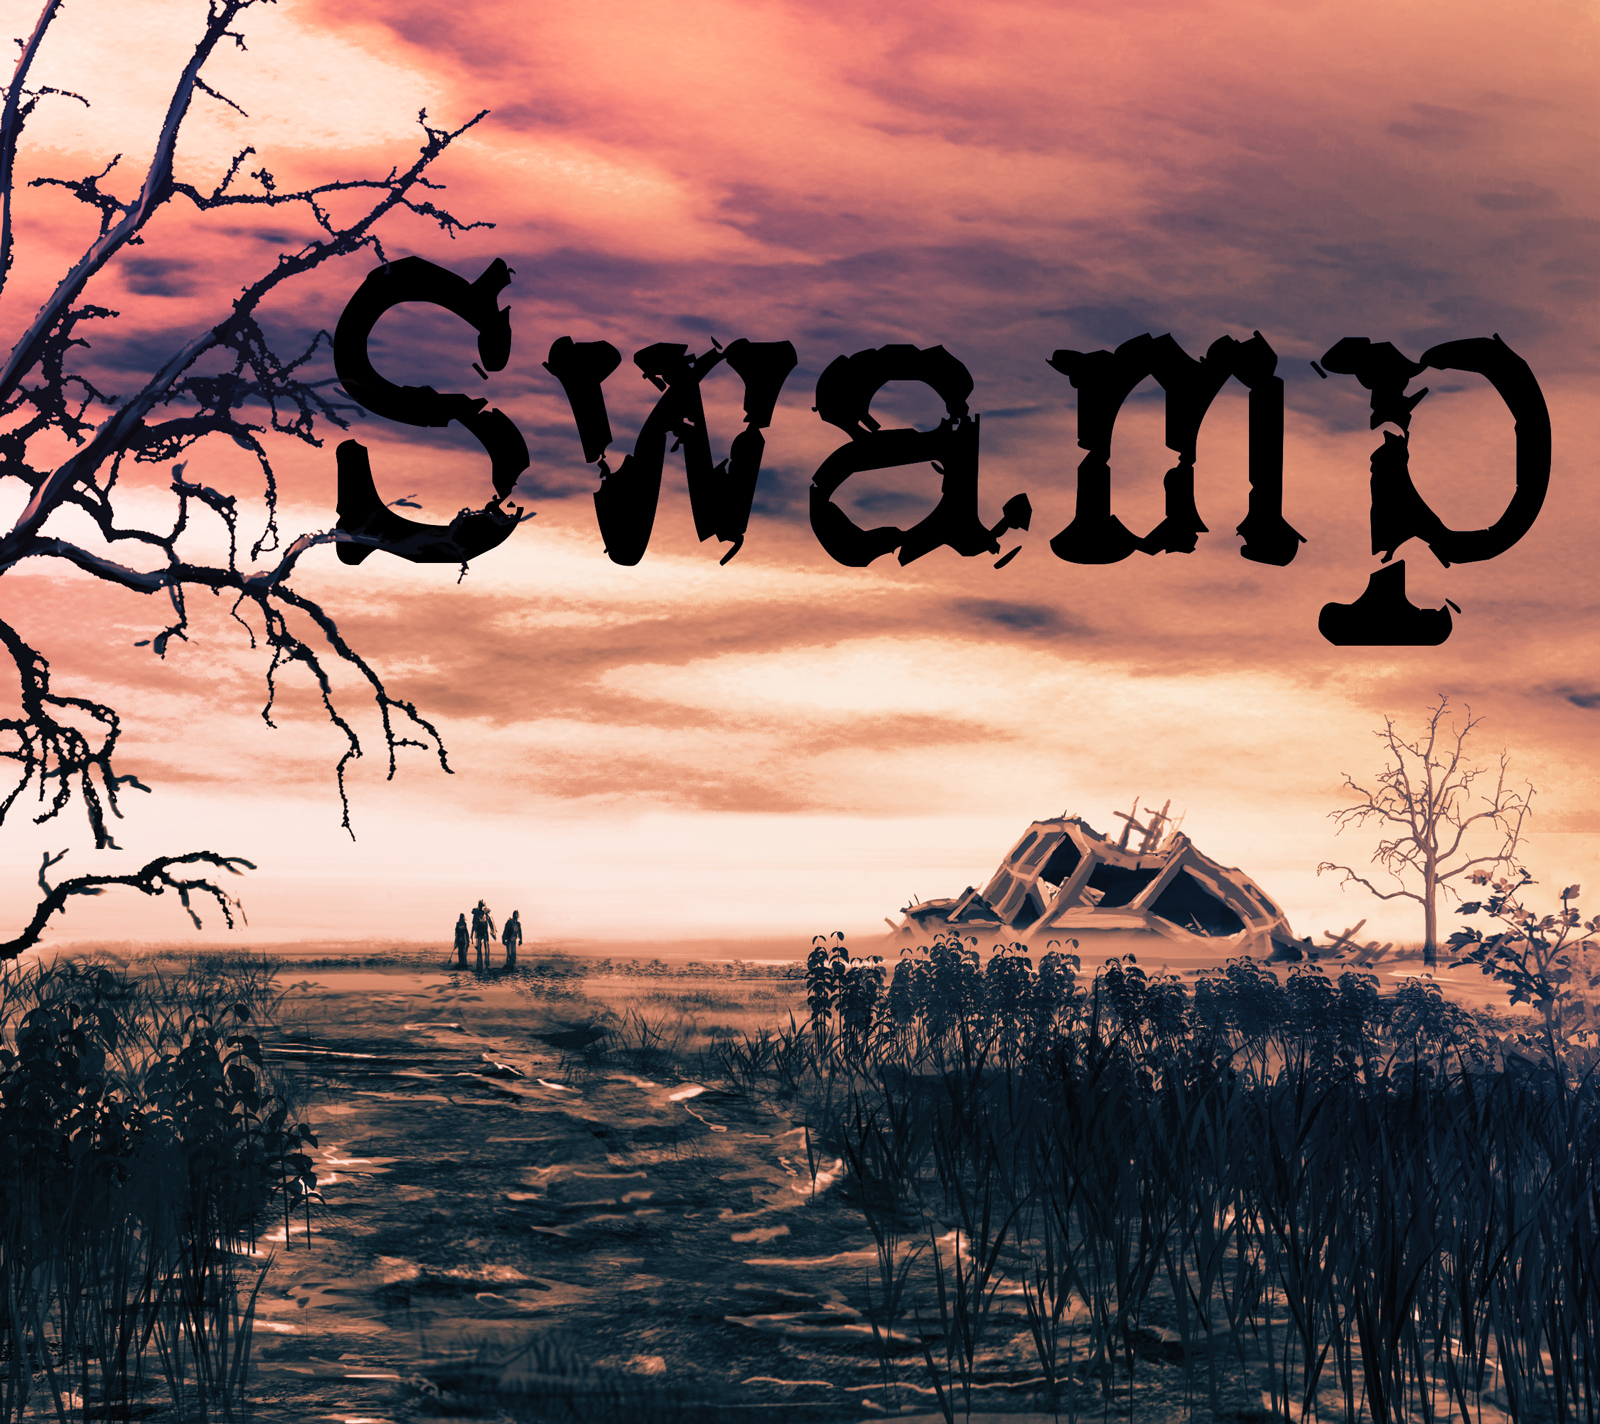 Swamp(demo)